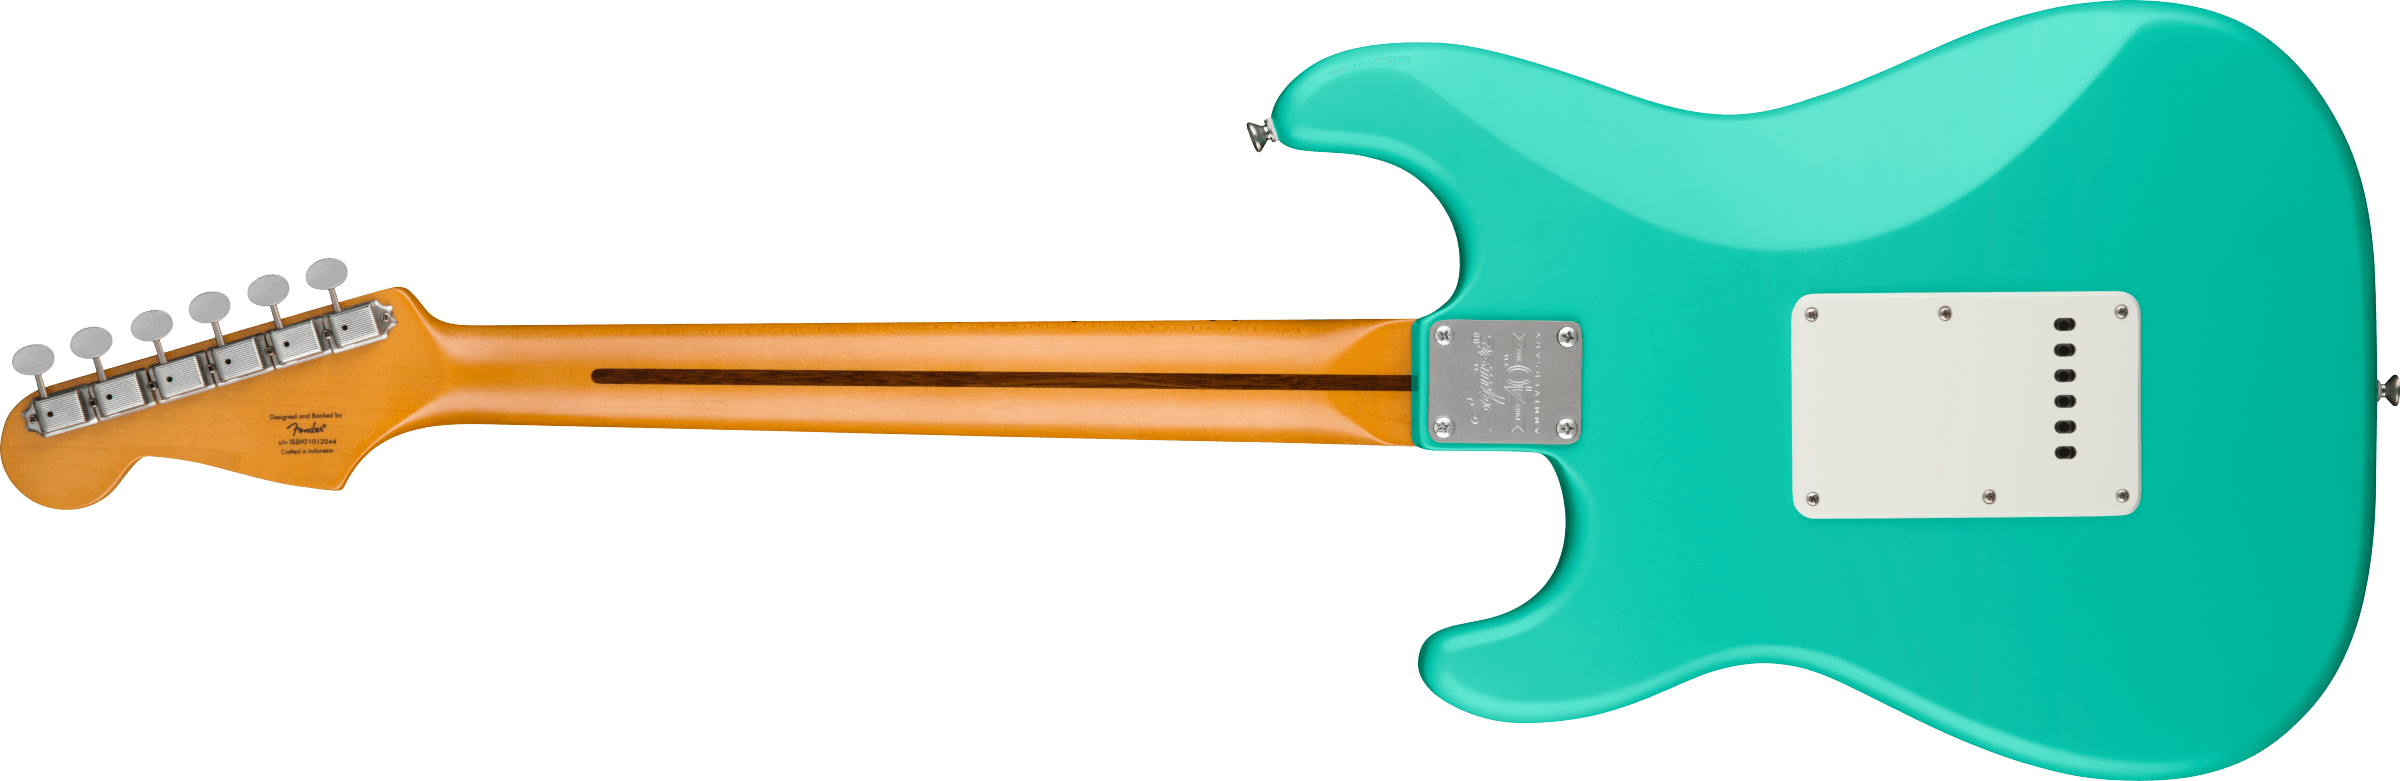 Squier Strat 40th Anniversary Vintage Edition Mn - Satin Seafoam Green - Str shape electric guitar - Variation 1